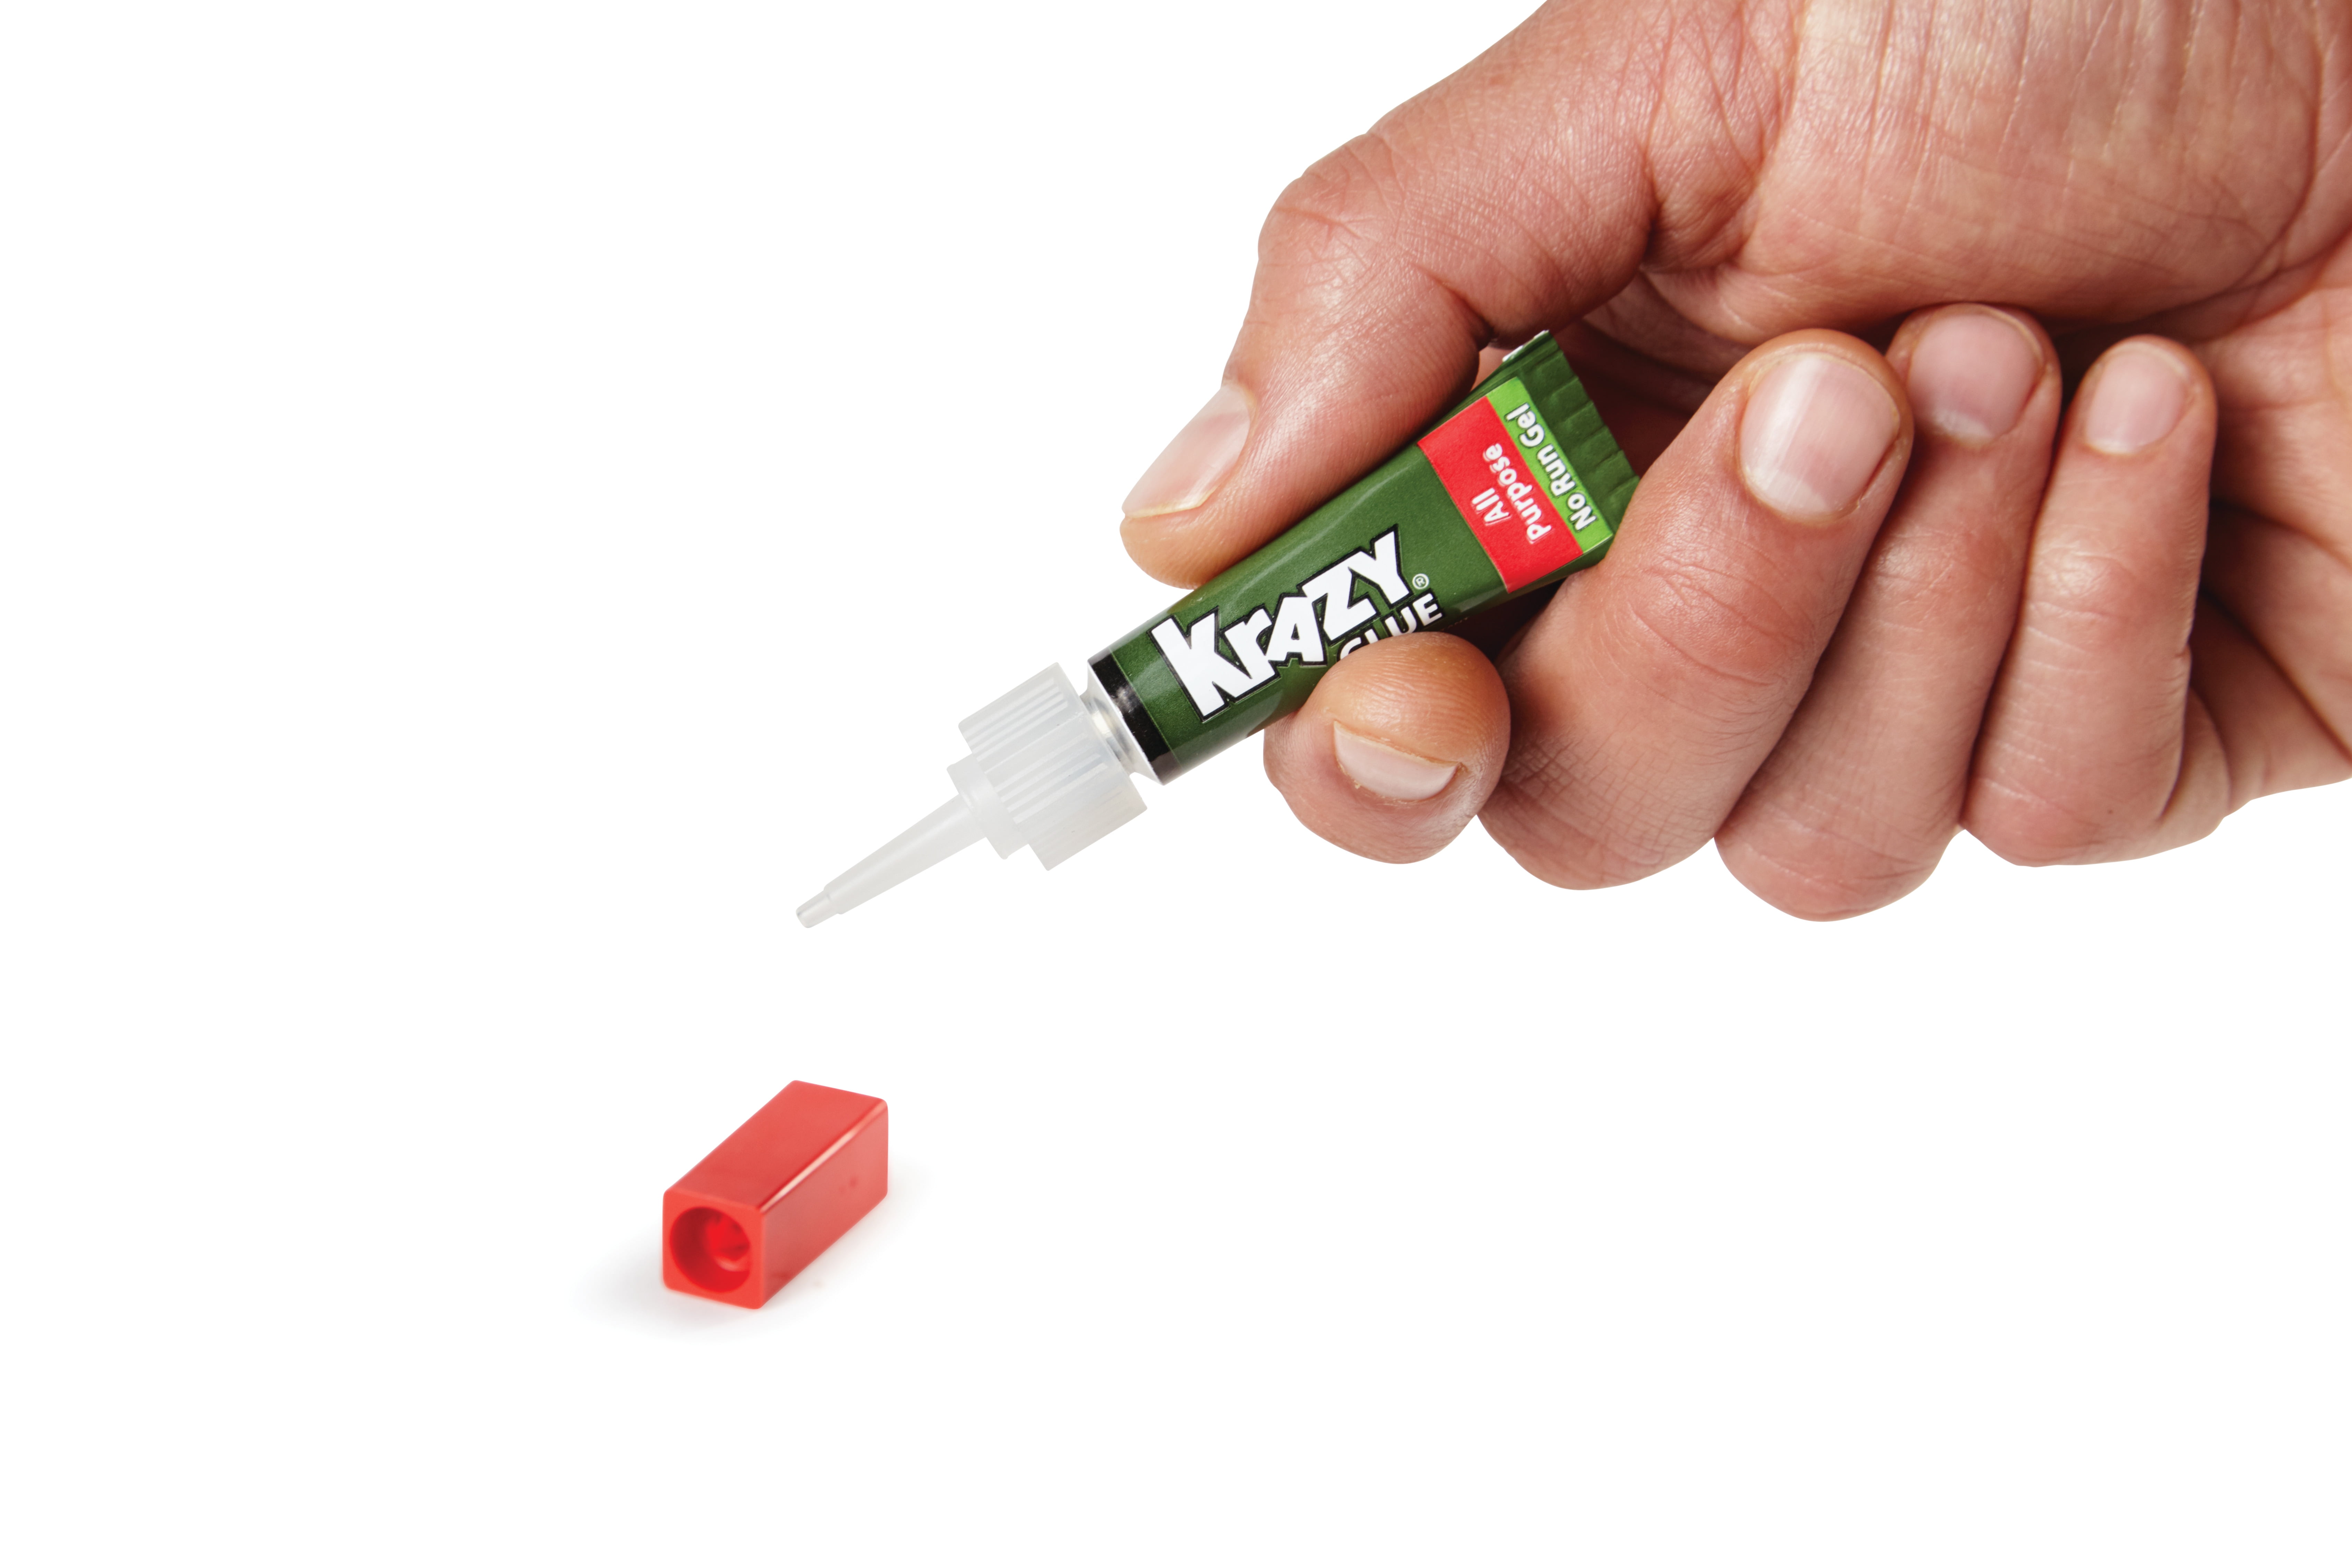 Krazy Glue All Purpose Precision Control Pen, 0.141 oz